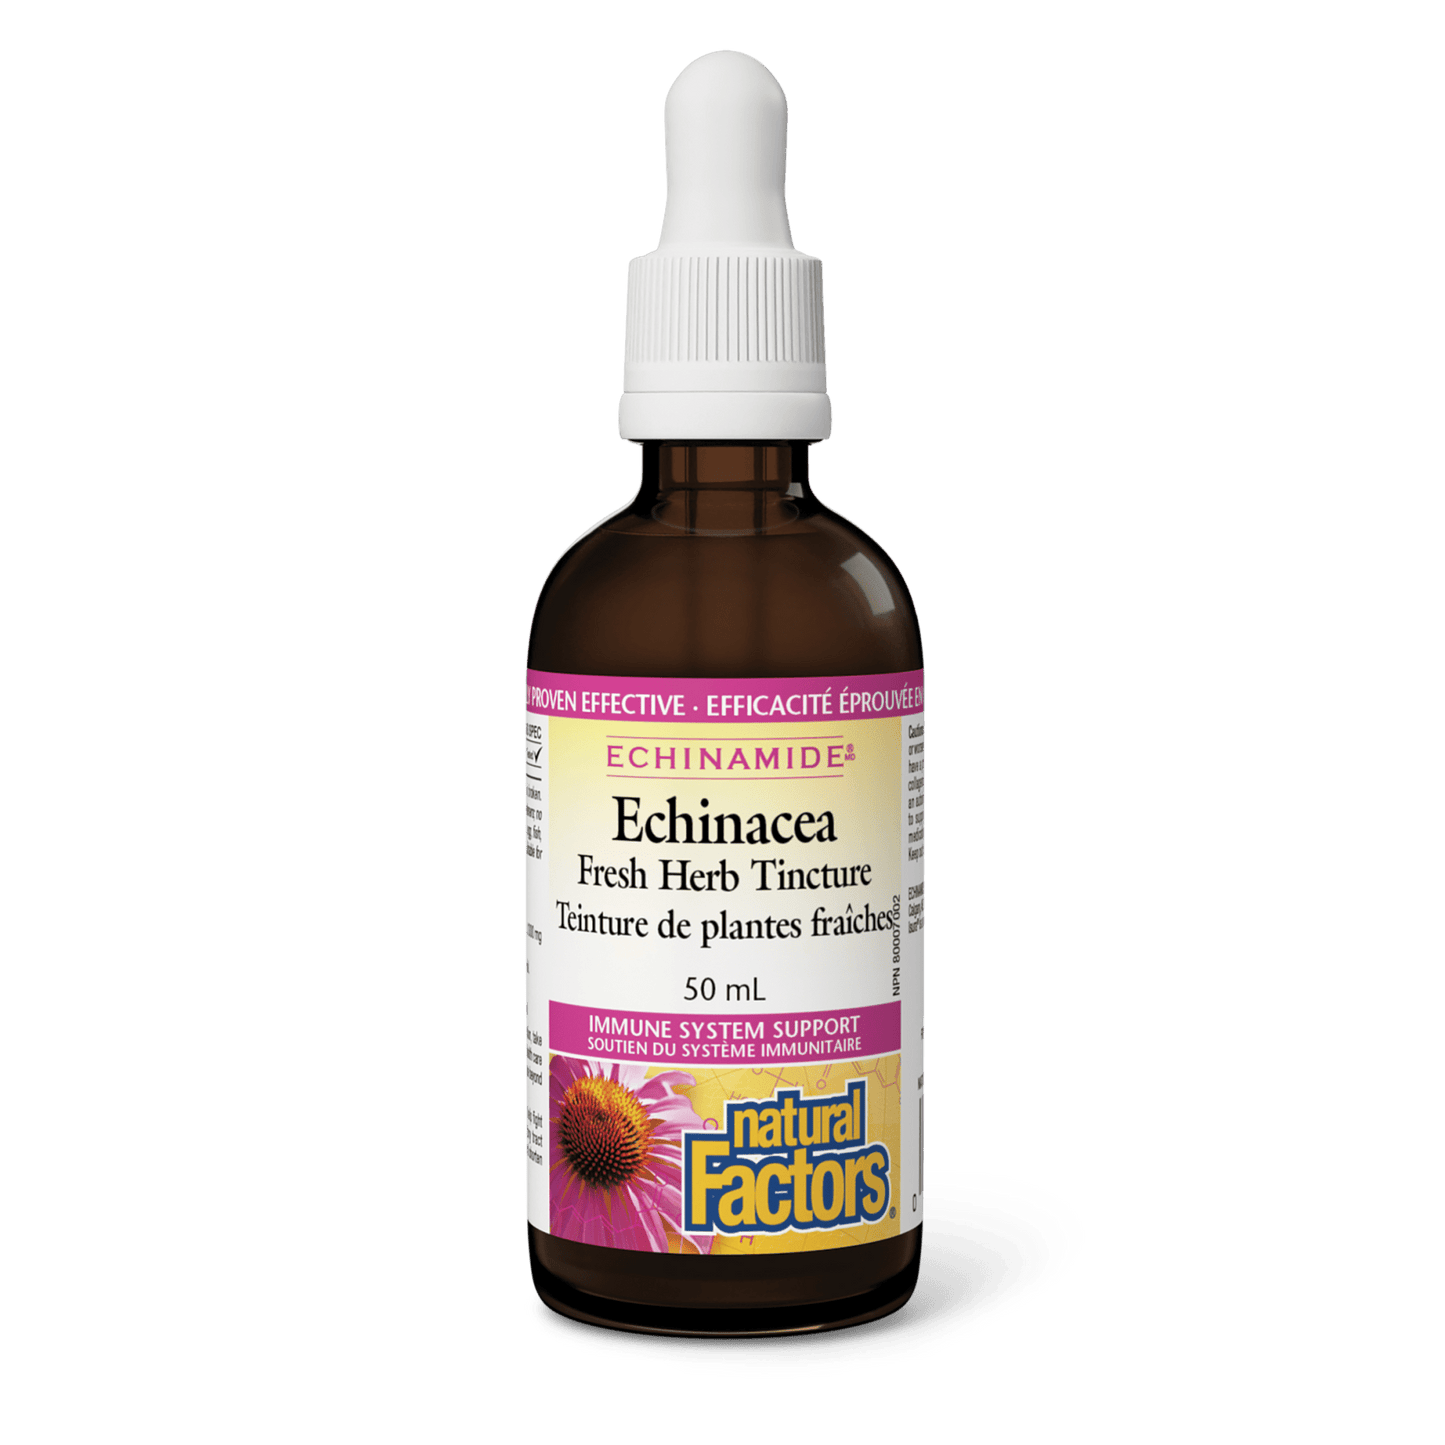 Echinacea Fresh Herb Tincture, ECHINAMIDE, Natural Factors|v|image|4721